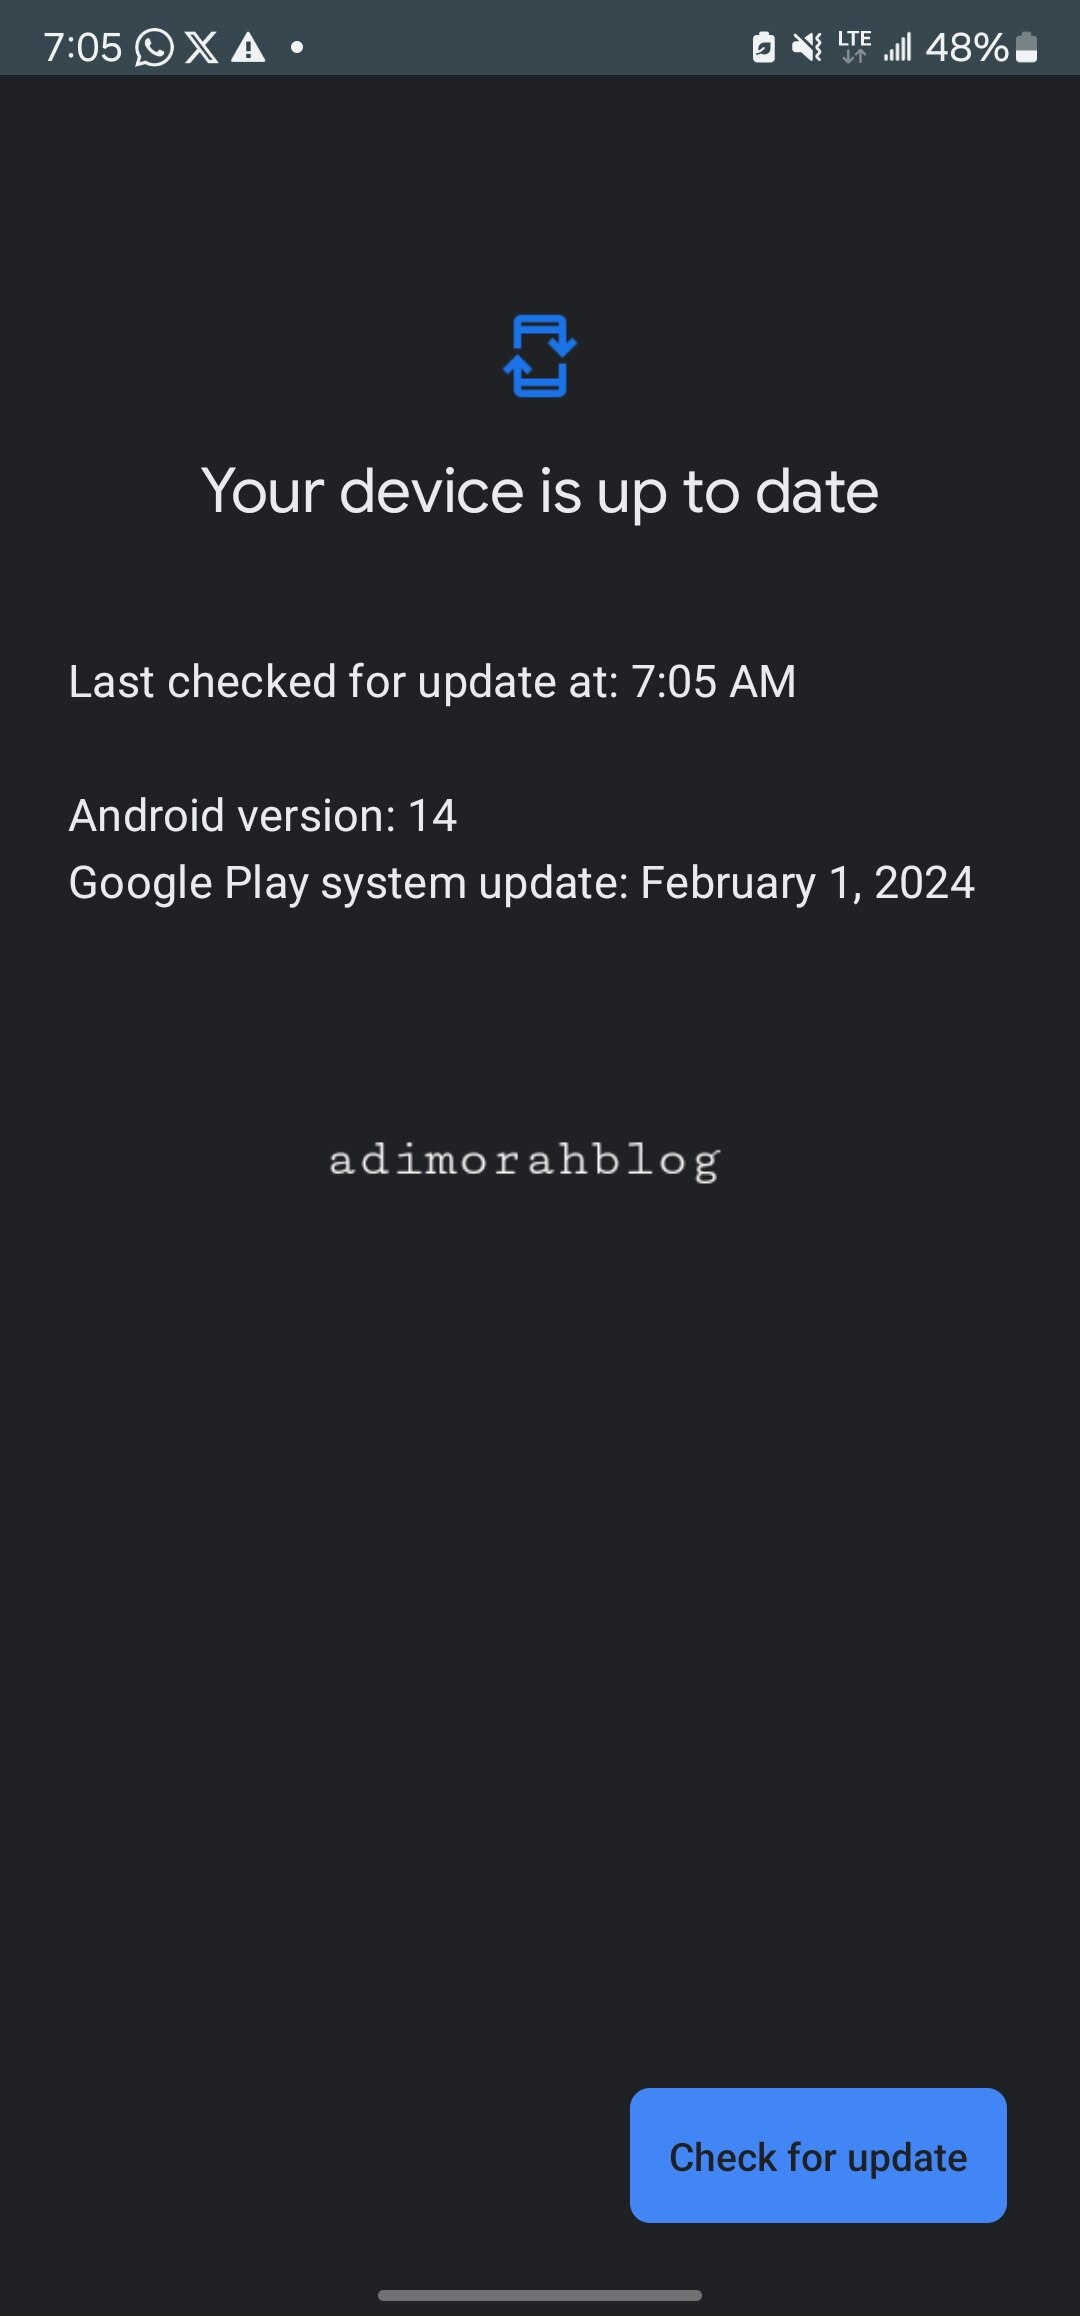 Samsung February 2024 Google Play system updates